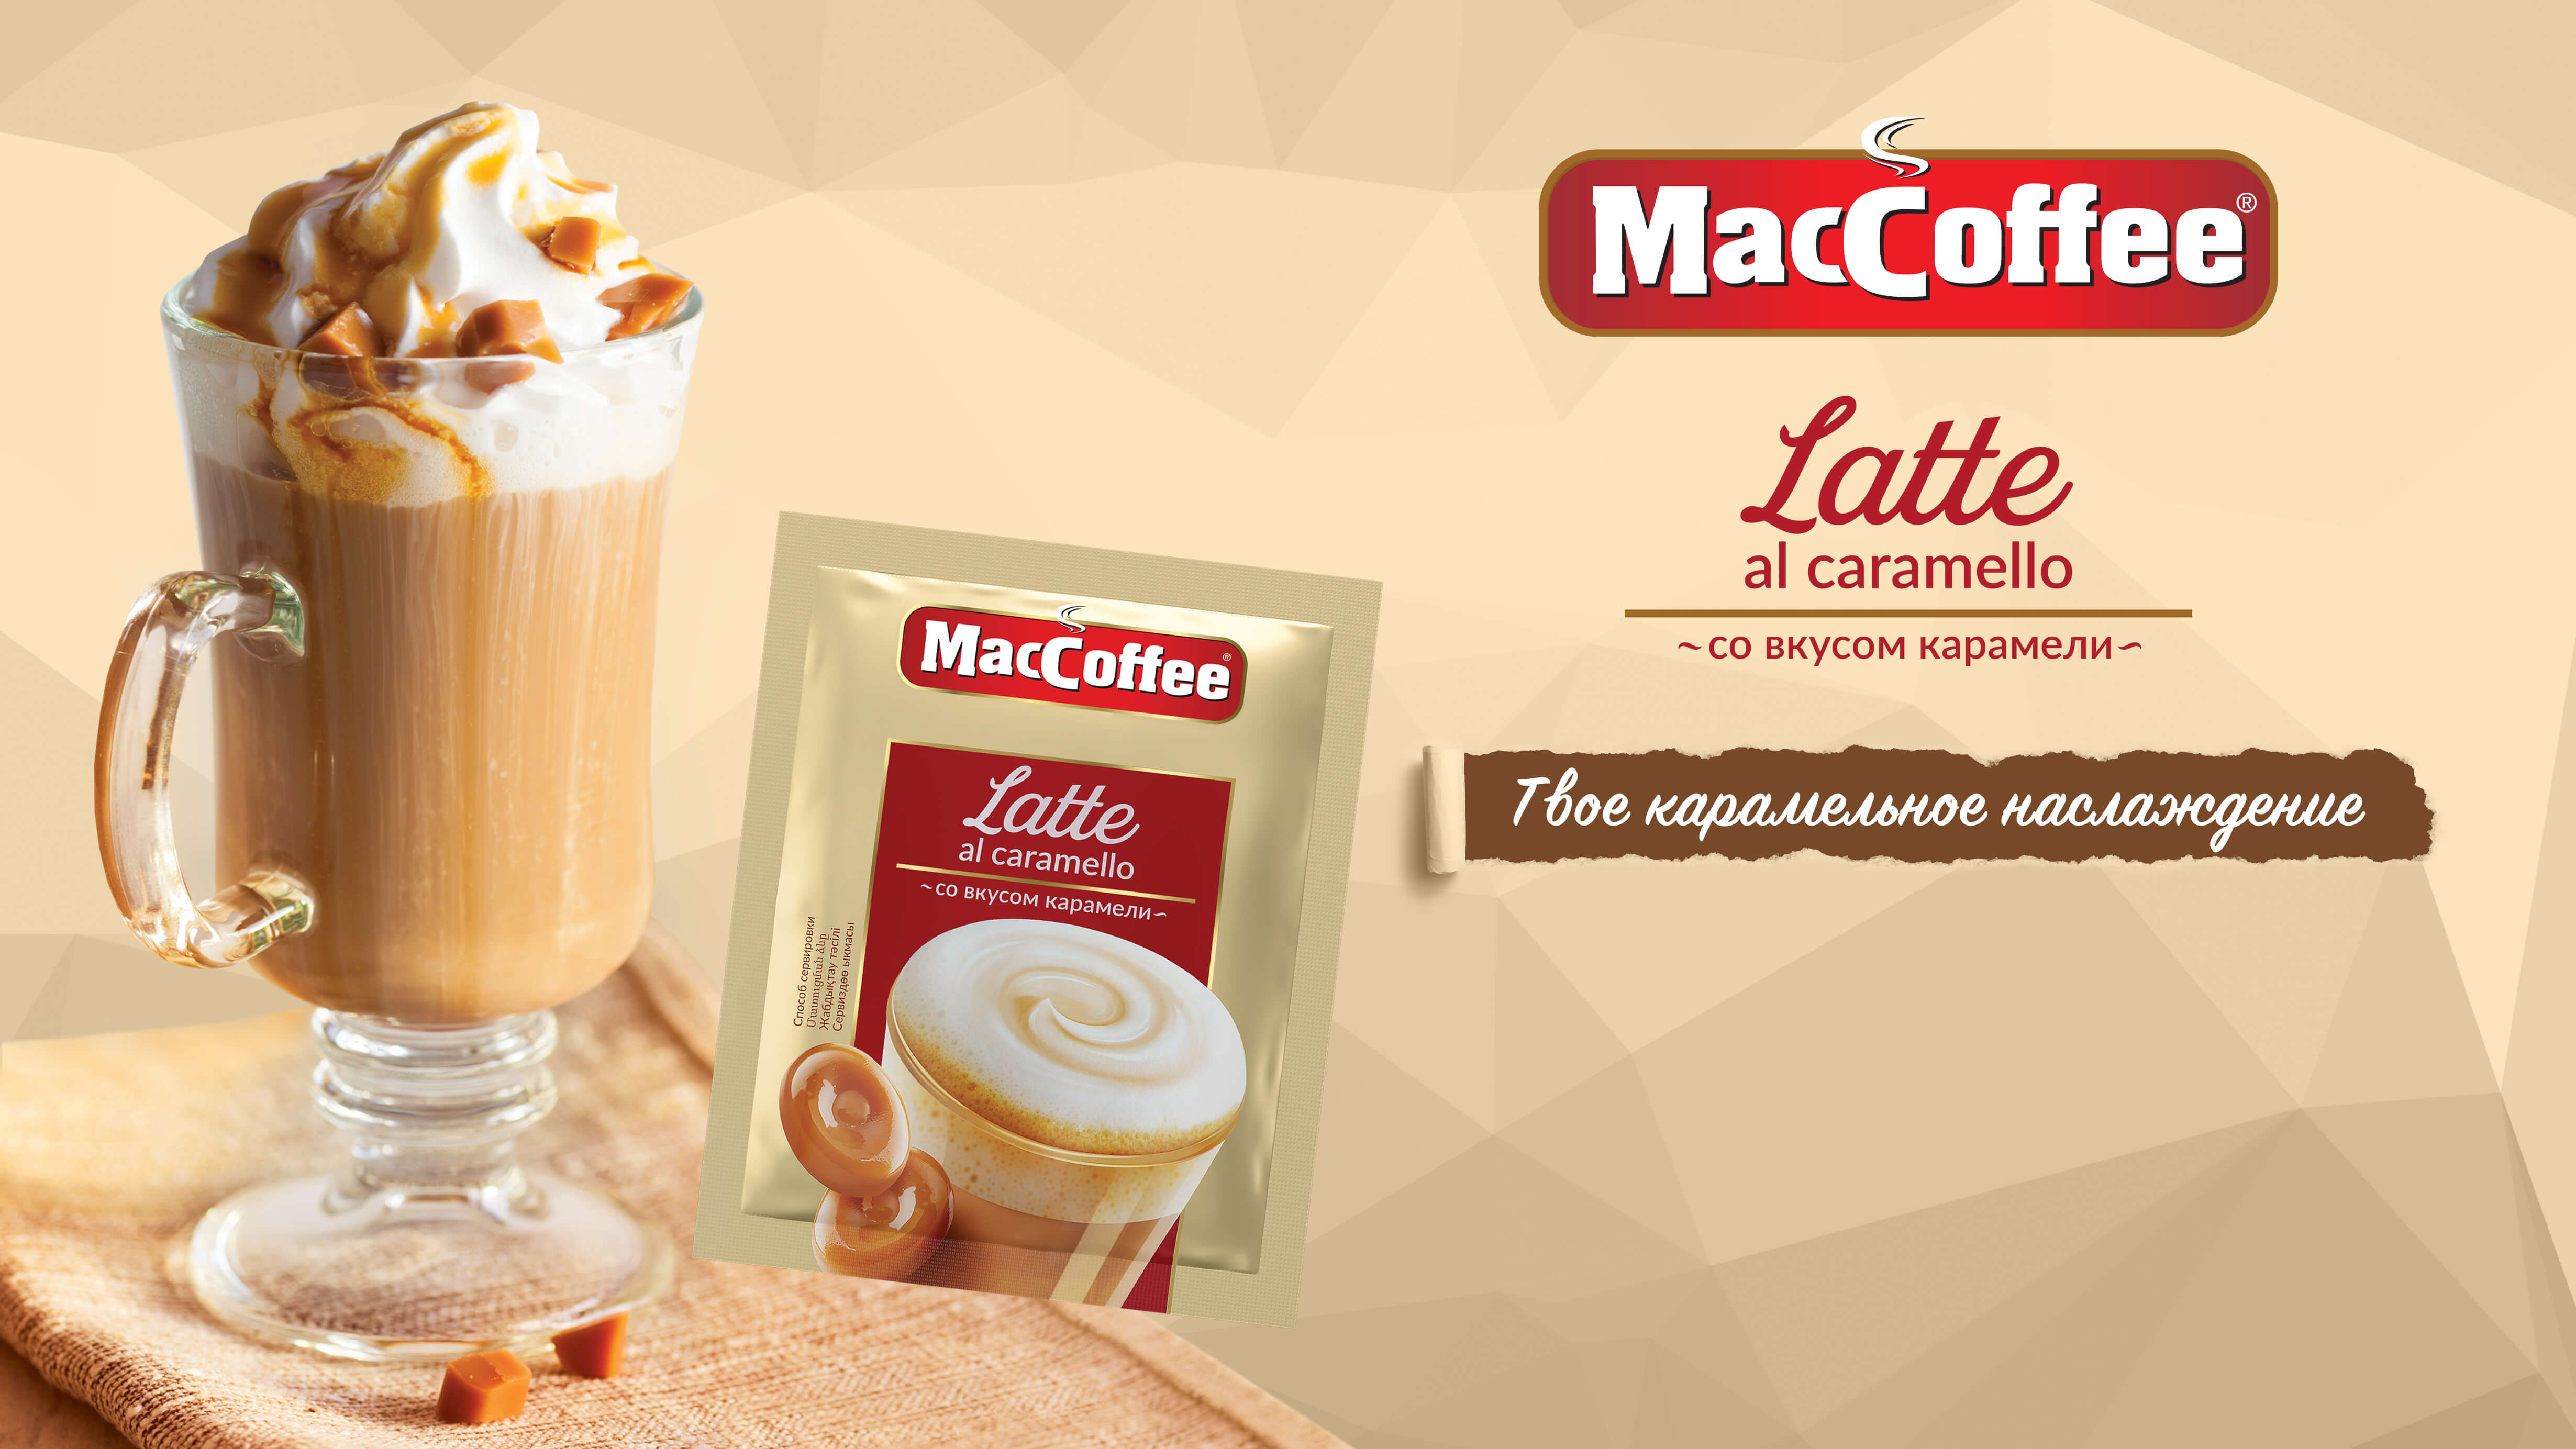 MacCoffee Latte Al Caramello – встречайте латте со вкусом карамели.